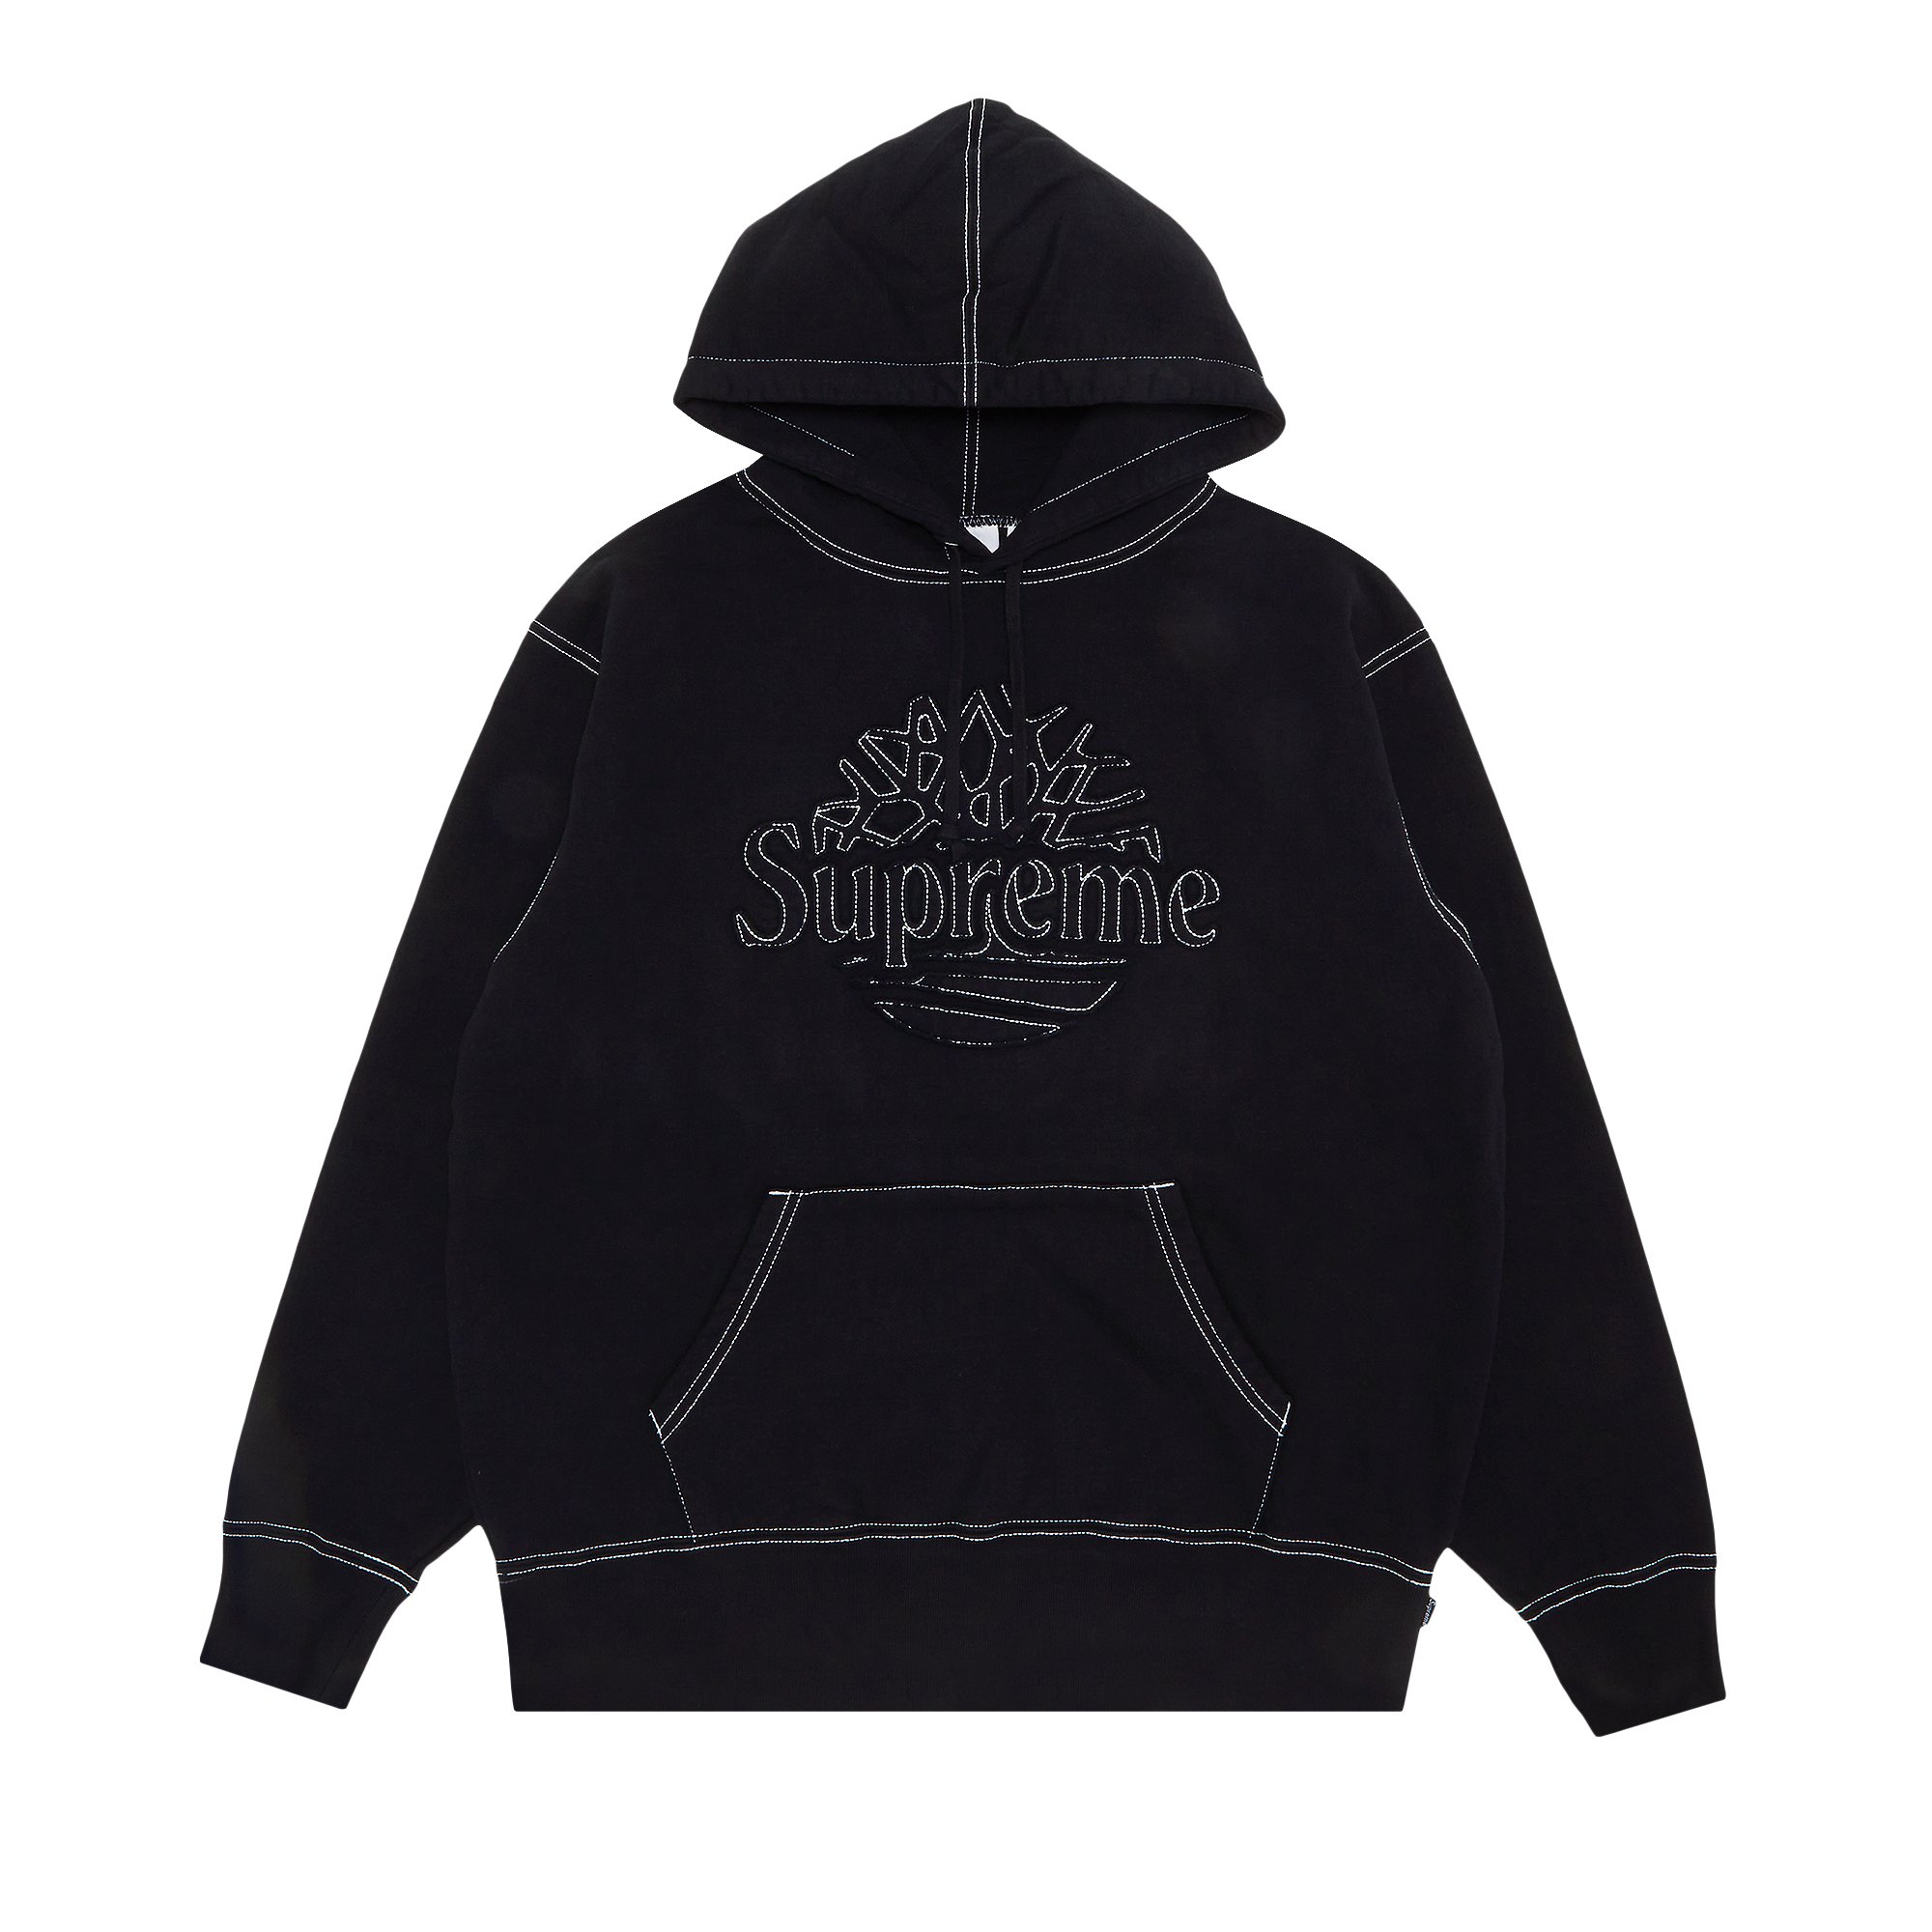 Supreme x Timberland Hooded Sweatshirt 'Black'